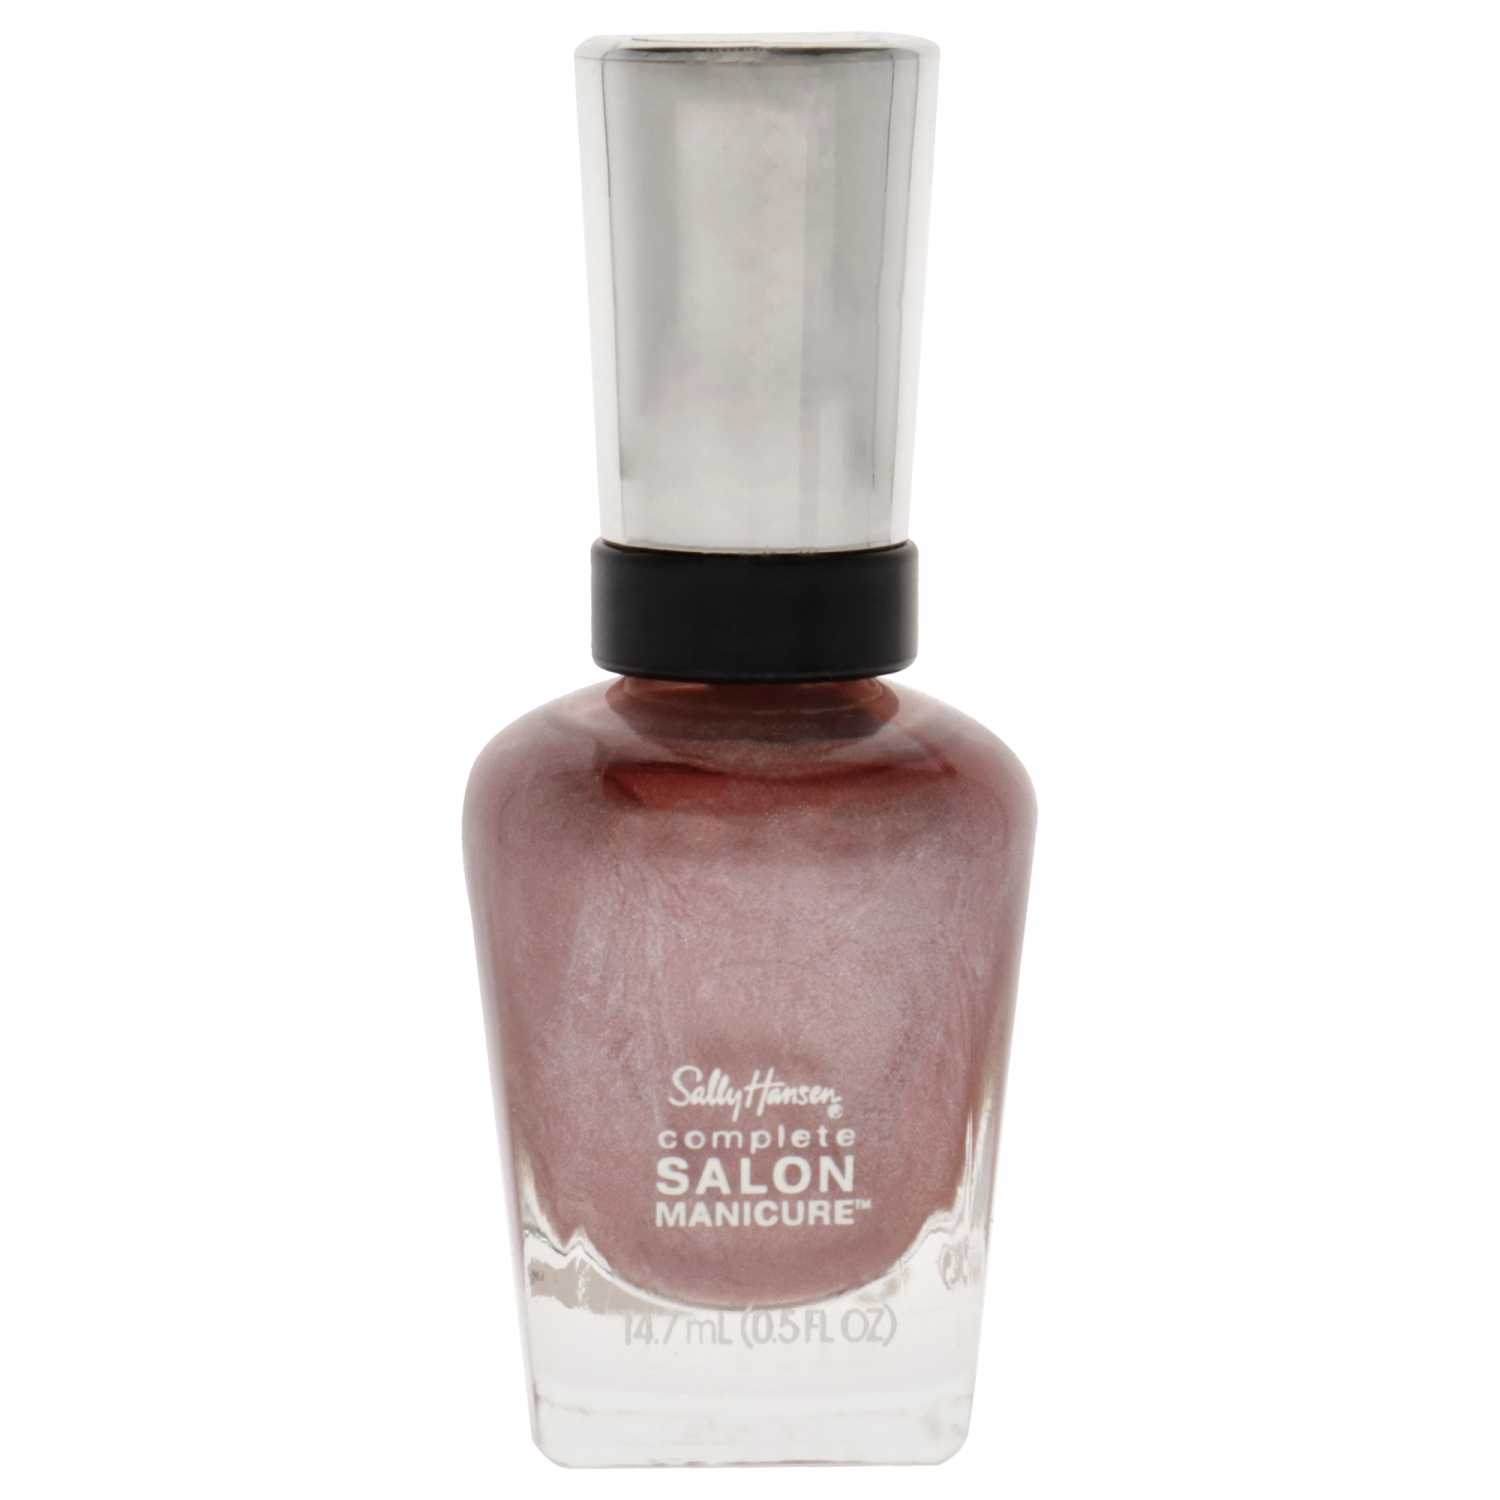 Complete Salon Manicure - 301 Raisin The Bar by Sally Hansen for Women - 0.5 oz Nail Polish